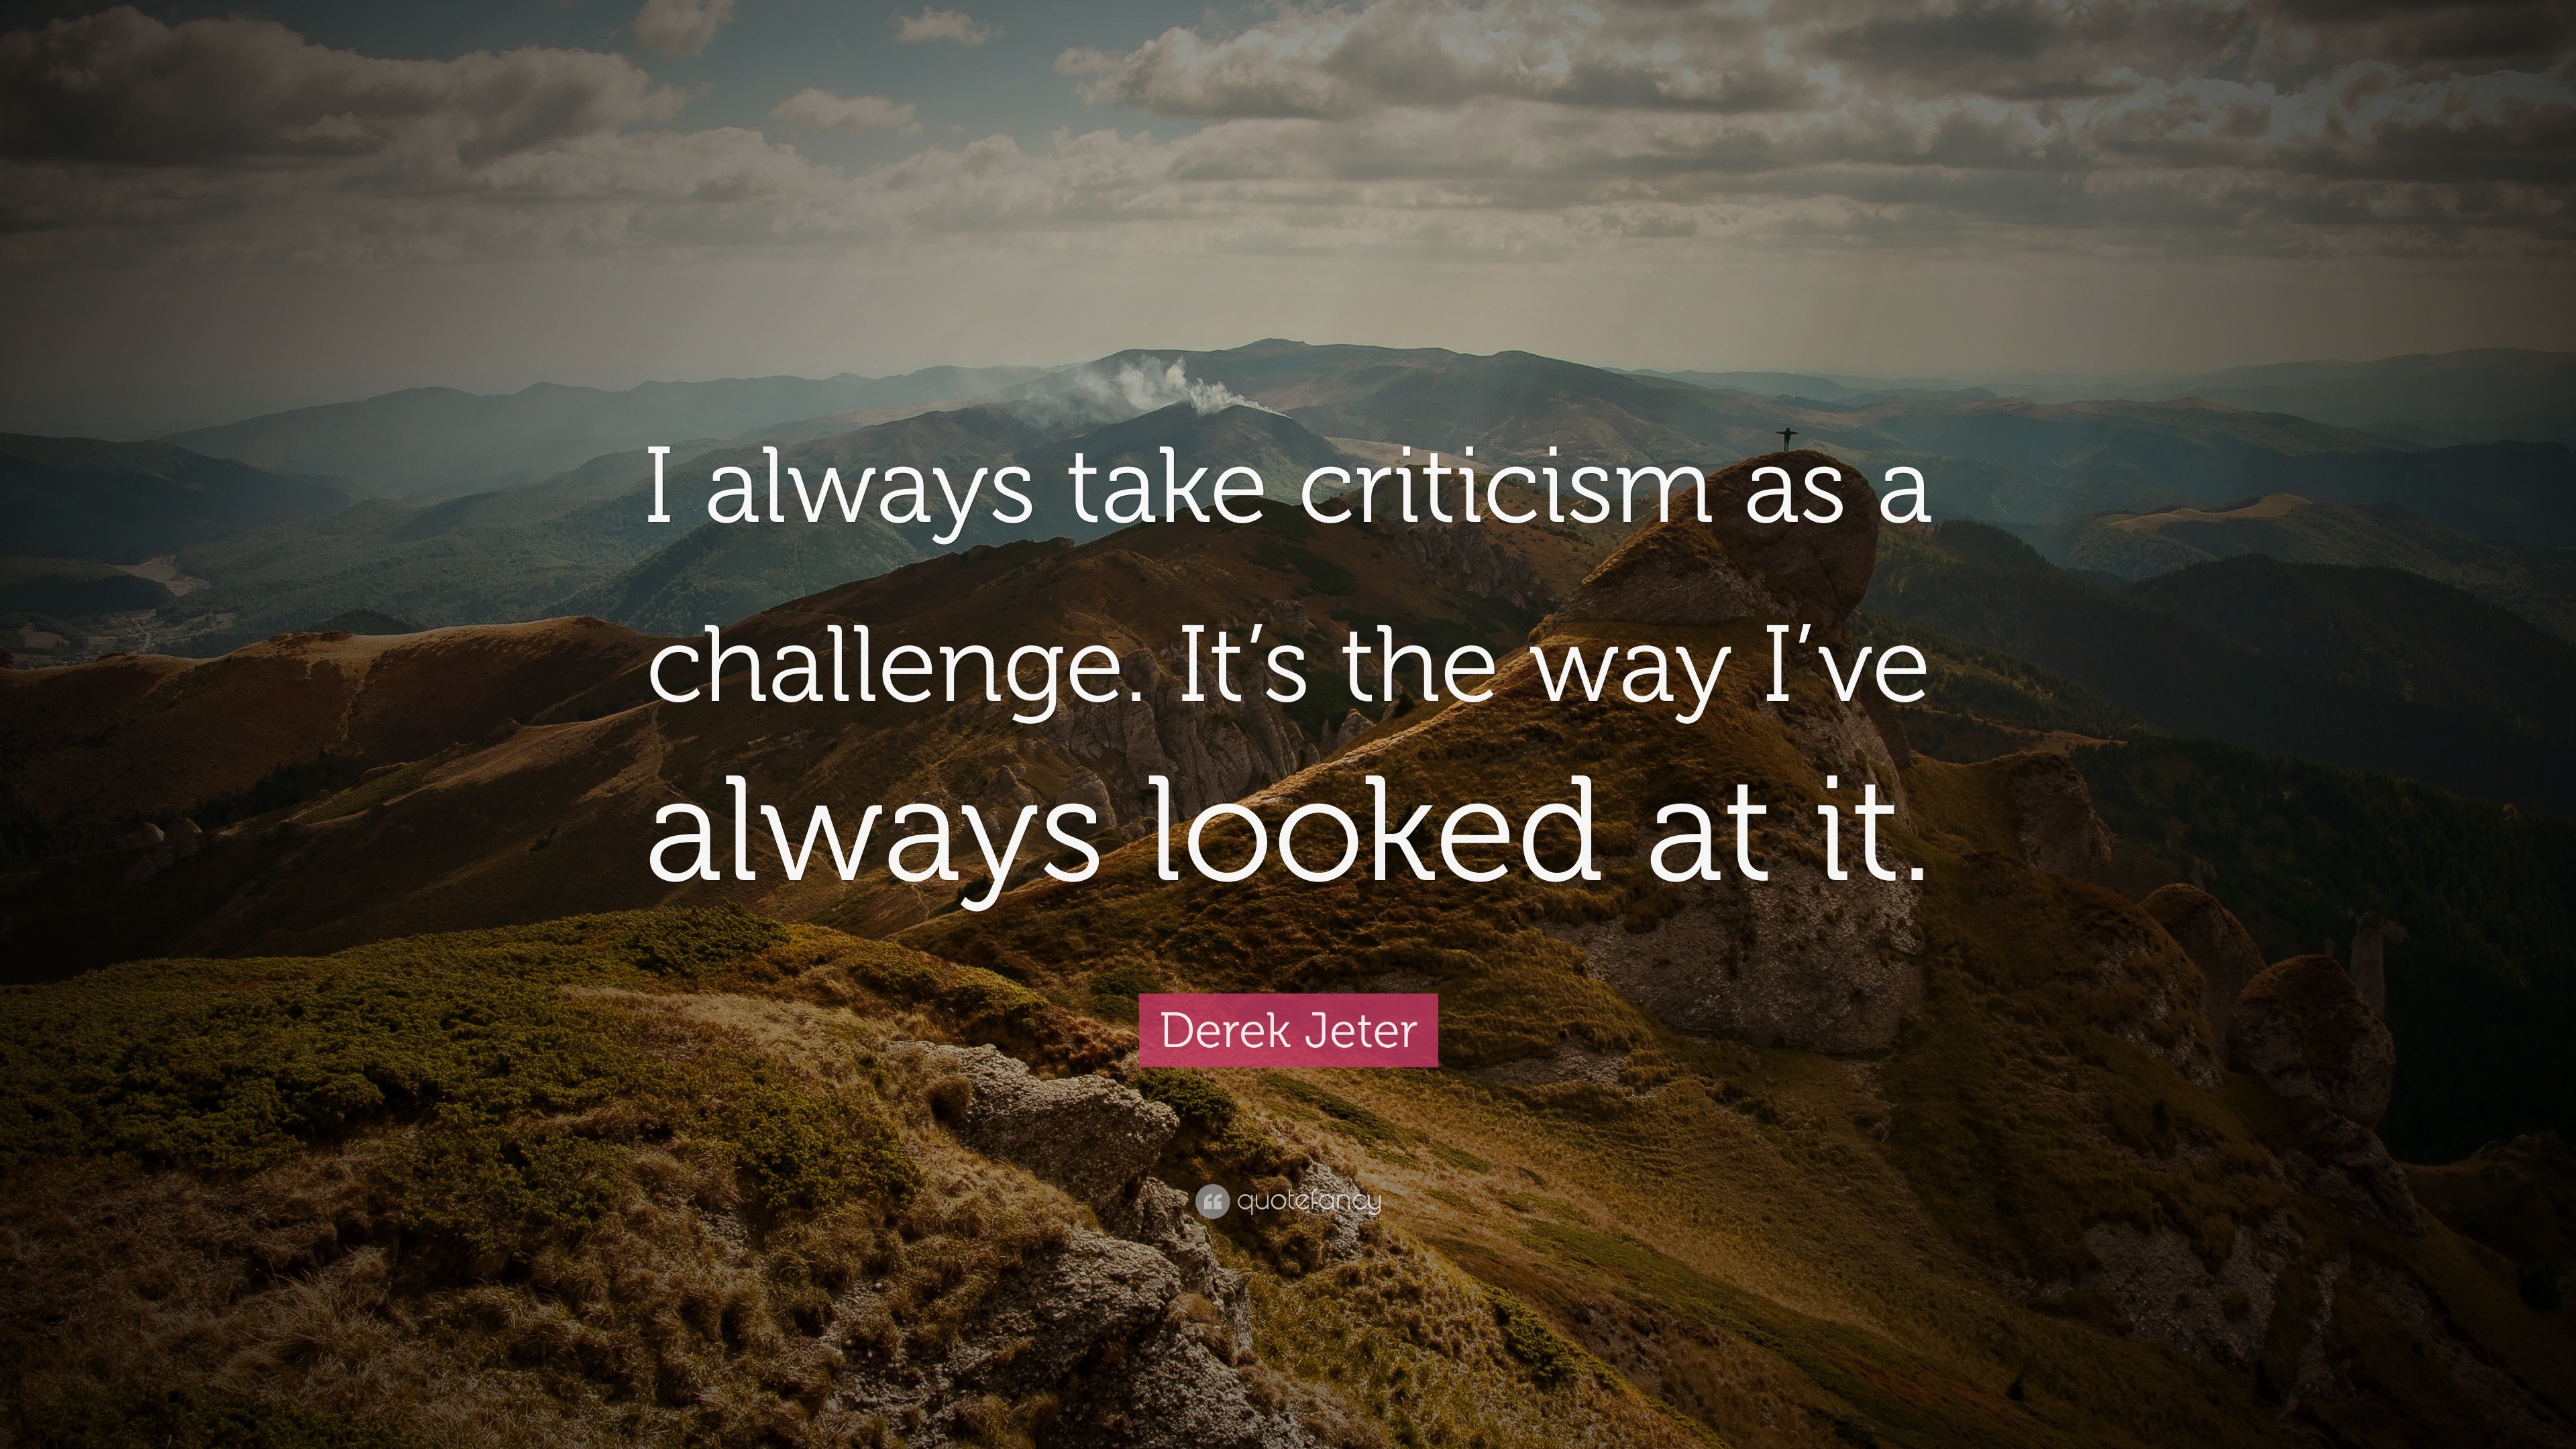 Derek Jeter Quote: "I always take criticism as a challenge ...